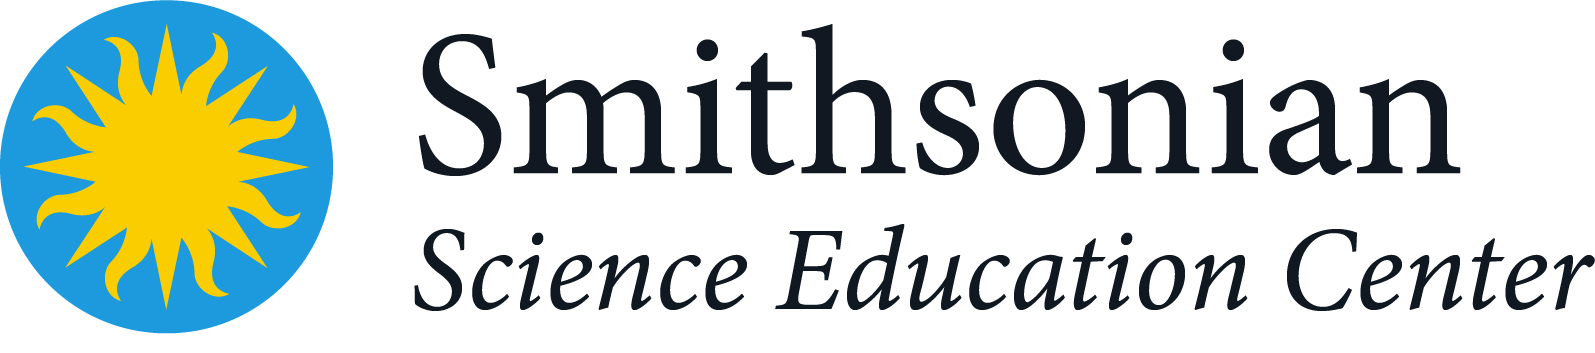 Smithsnoian Science Education Center logo